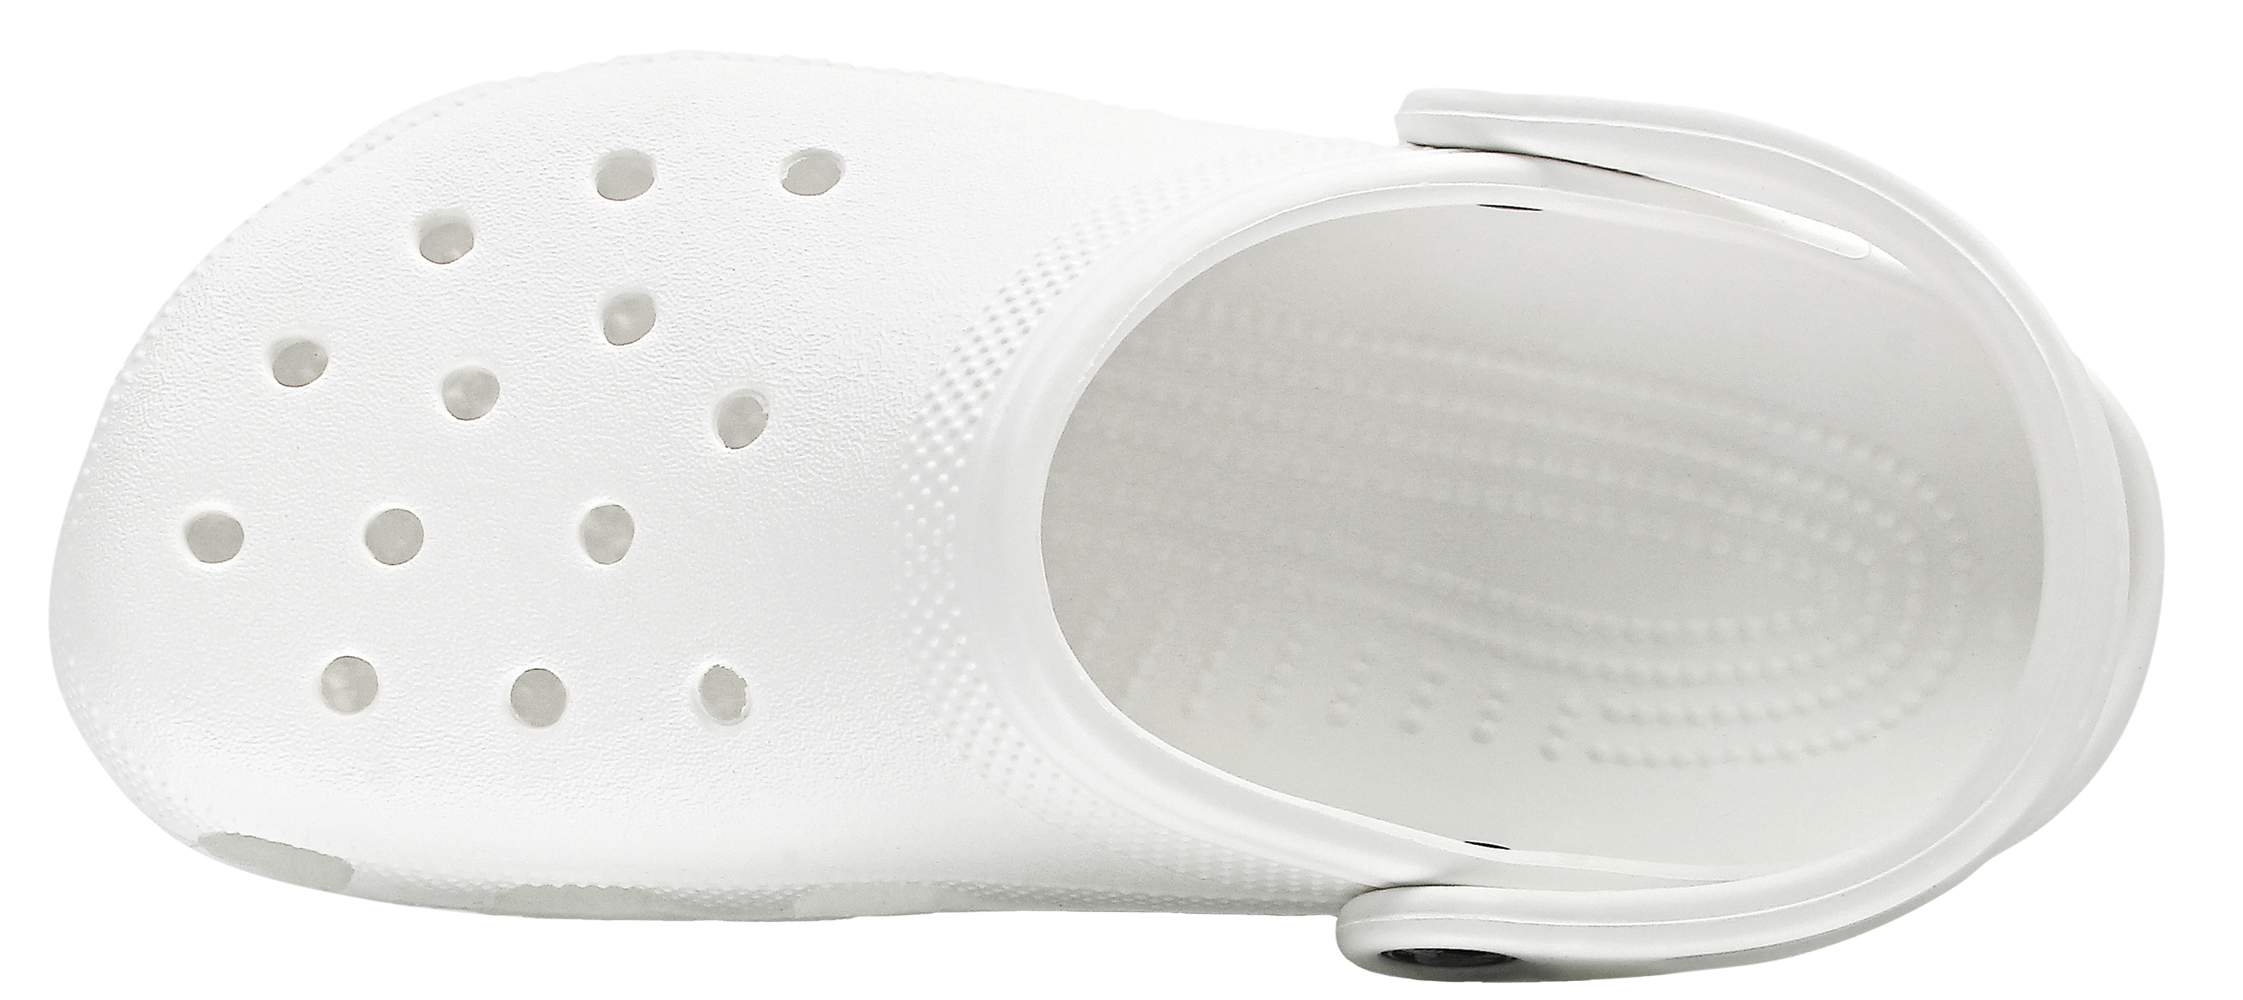 classic crocs white